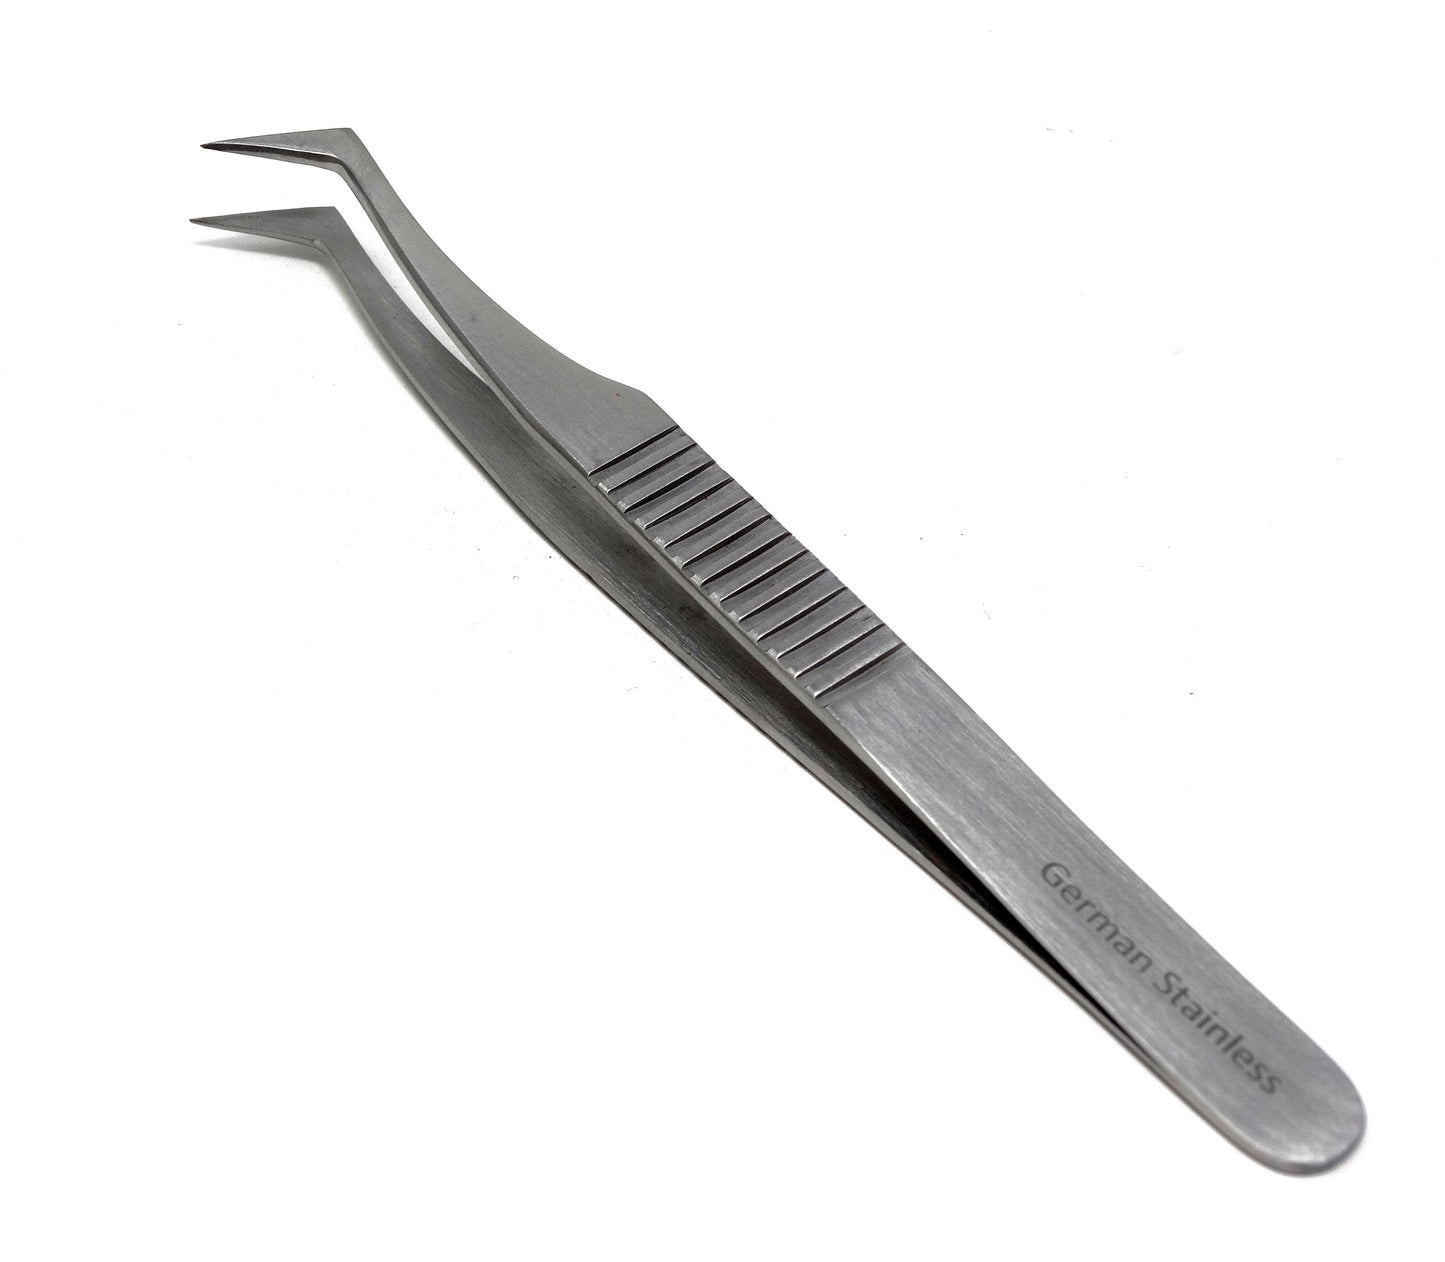 Stainless Steel Micro Surgical Forceps Tweezers Semi Angled, Ridged Handle, Premium Quality